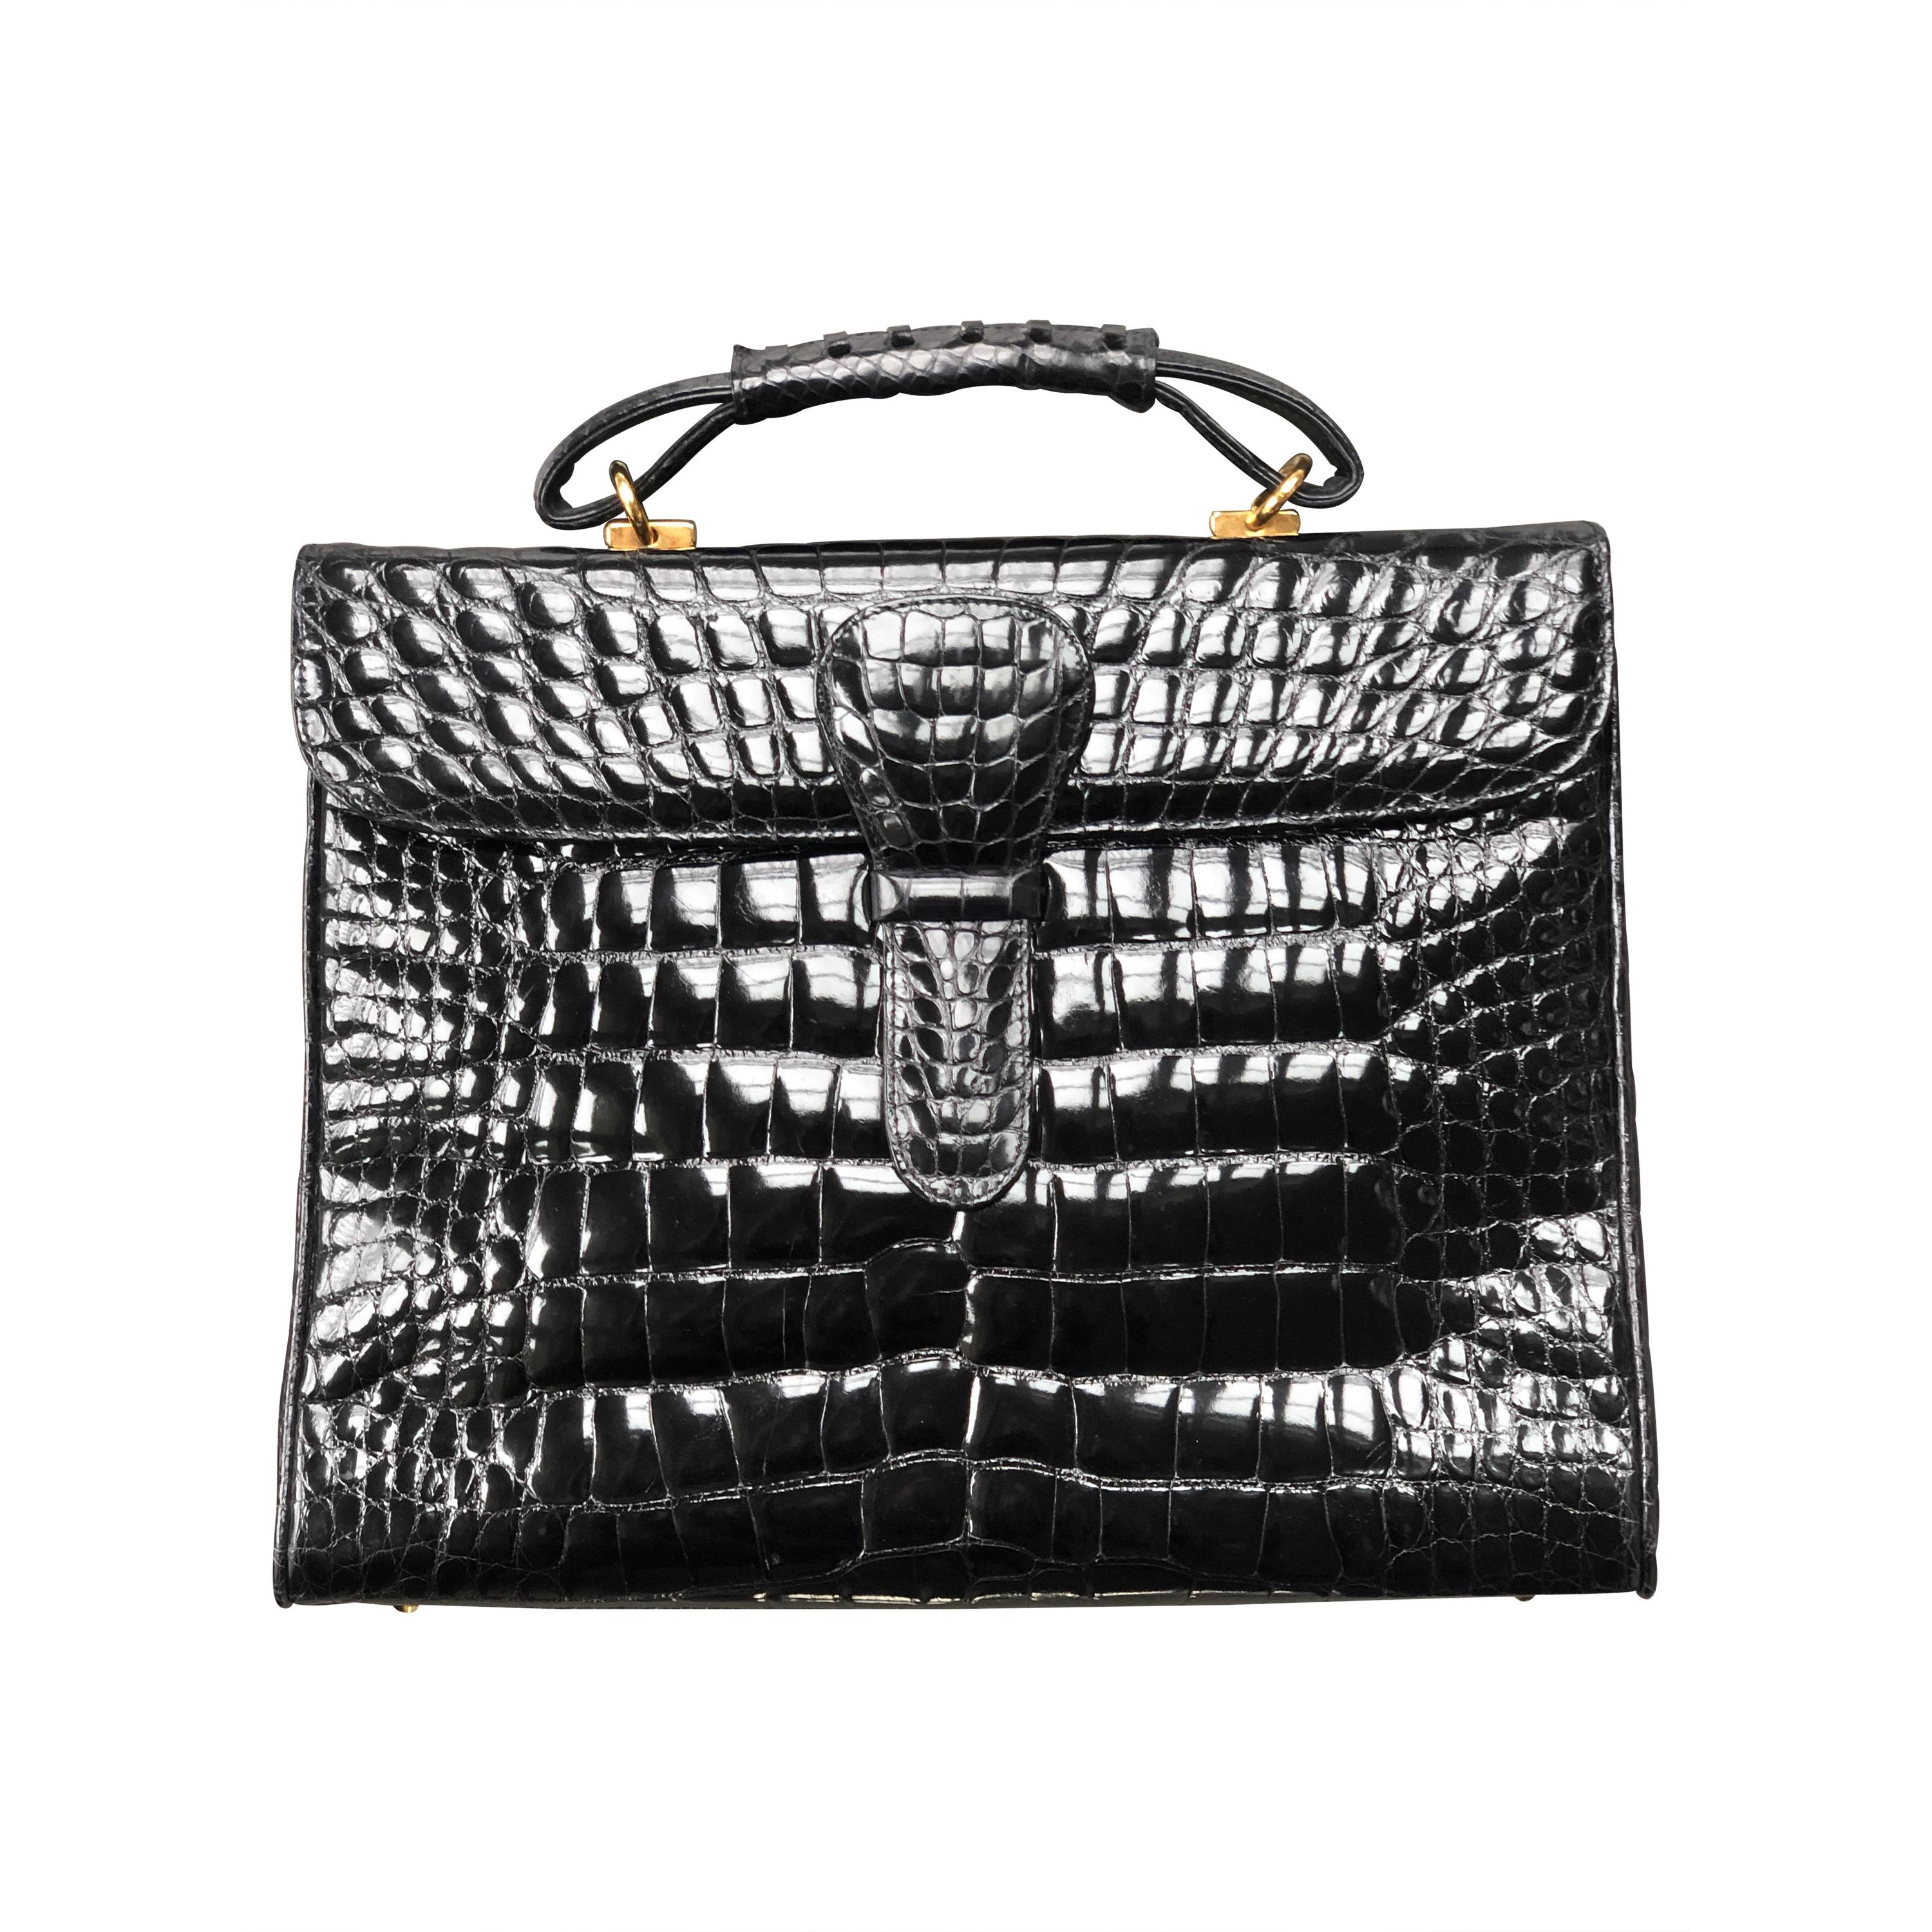 Neiman Marcus Black Genuine Alligator Handbag w Shoulder Strap by